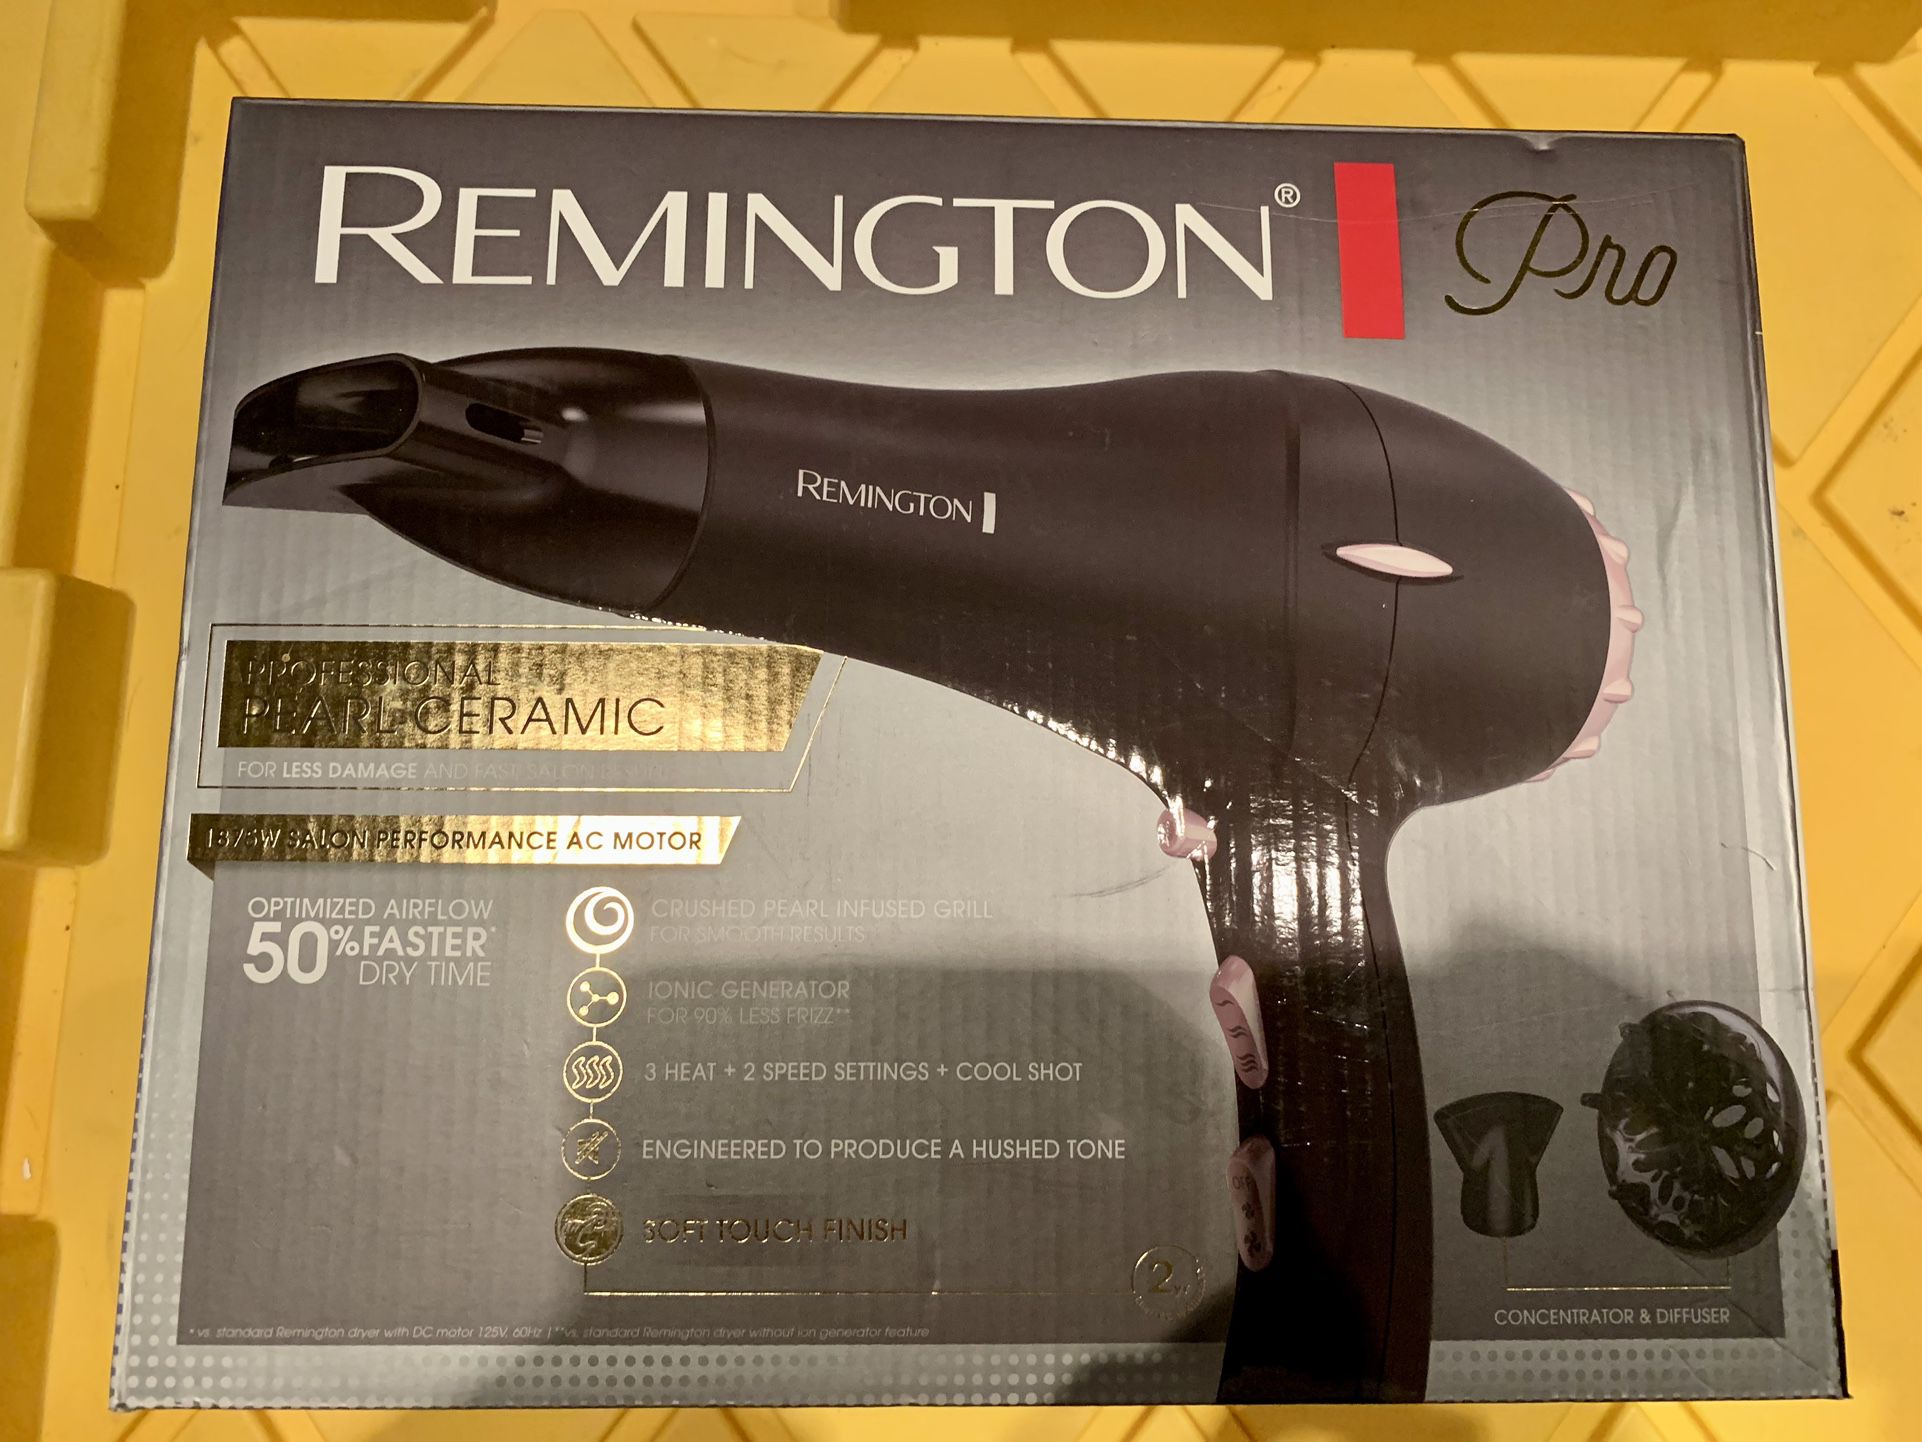 Remington Pro Professional Pearl Ceramic Hair Dryer 1875W Salon Performance Moto